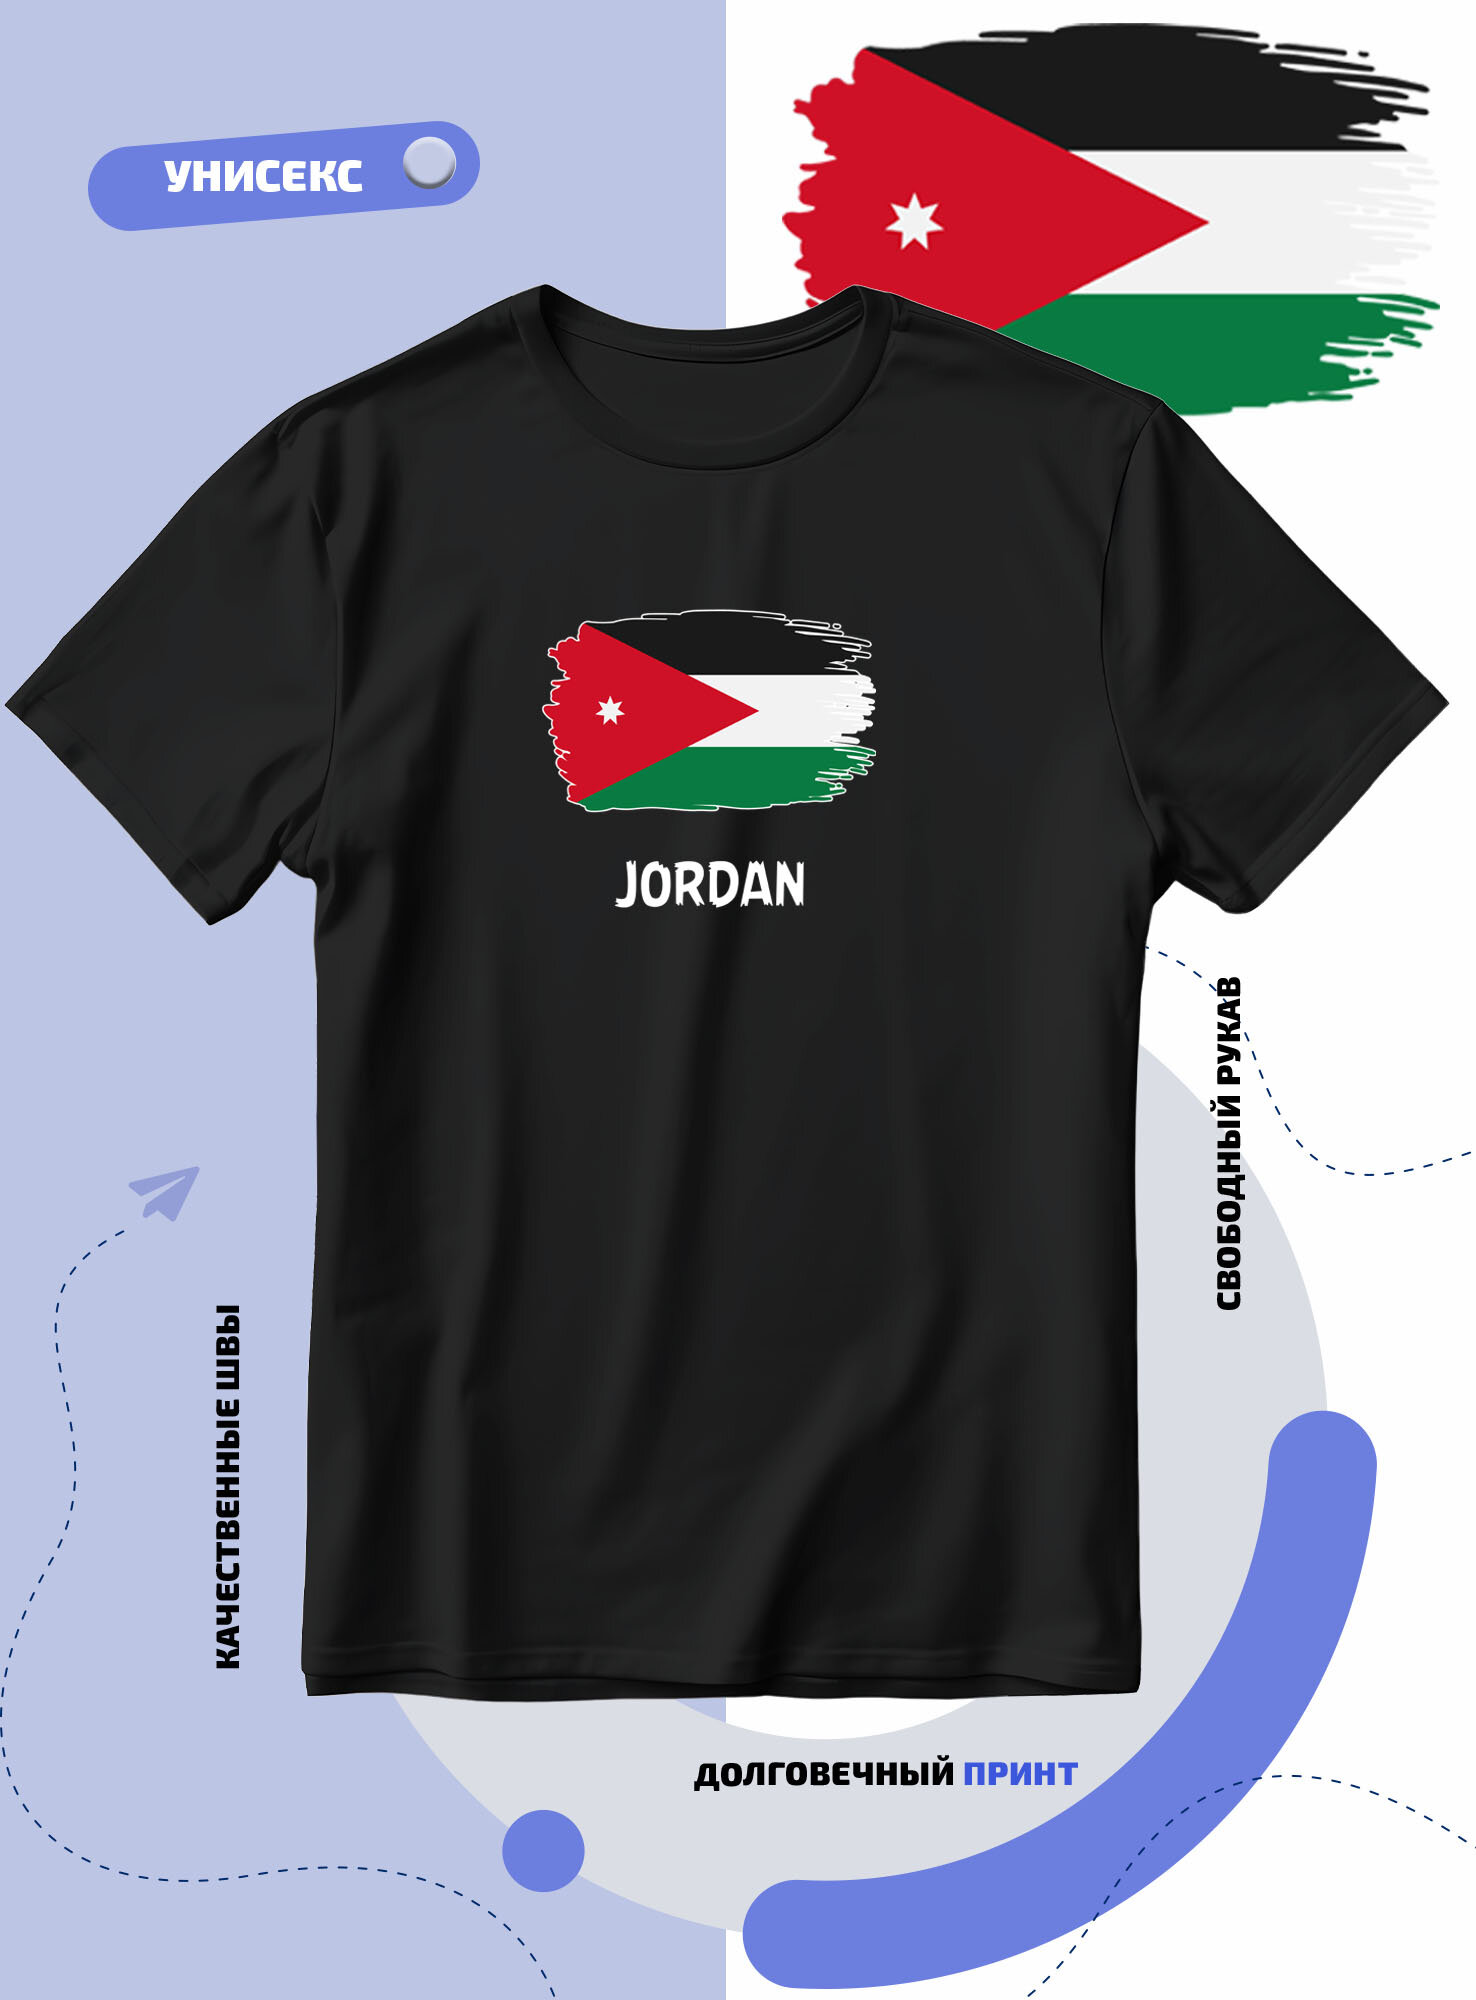 Футболка SMAIL-P с флагом Иордании-Jordan